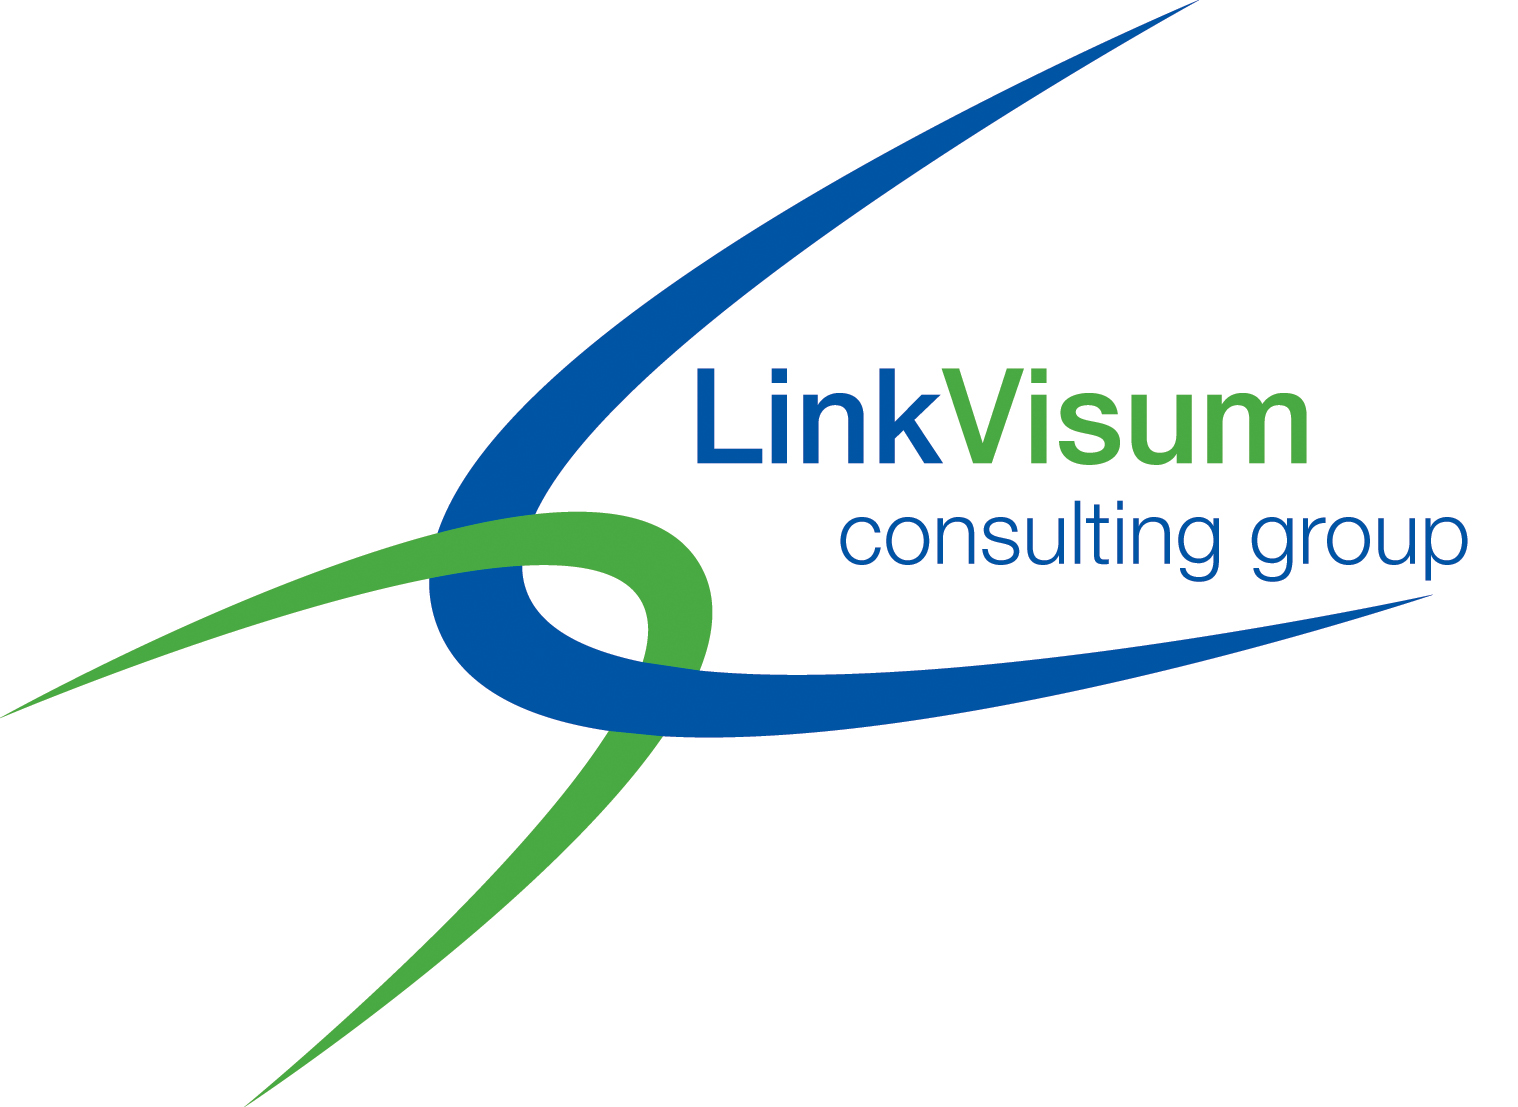 LinkVisum Consulting Group, Inc. Logo